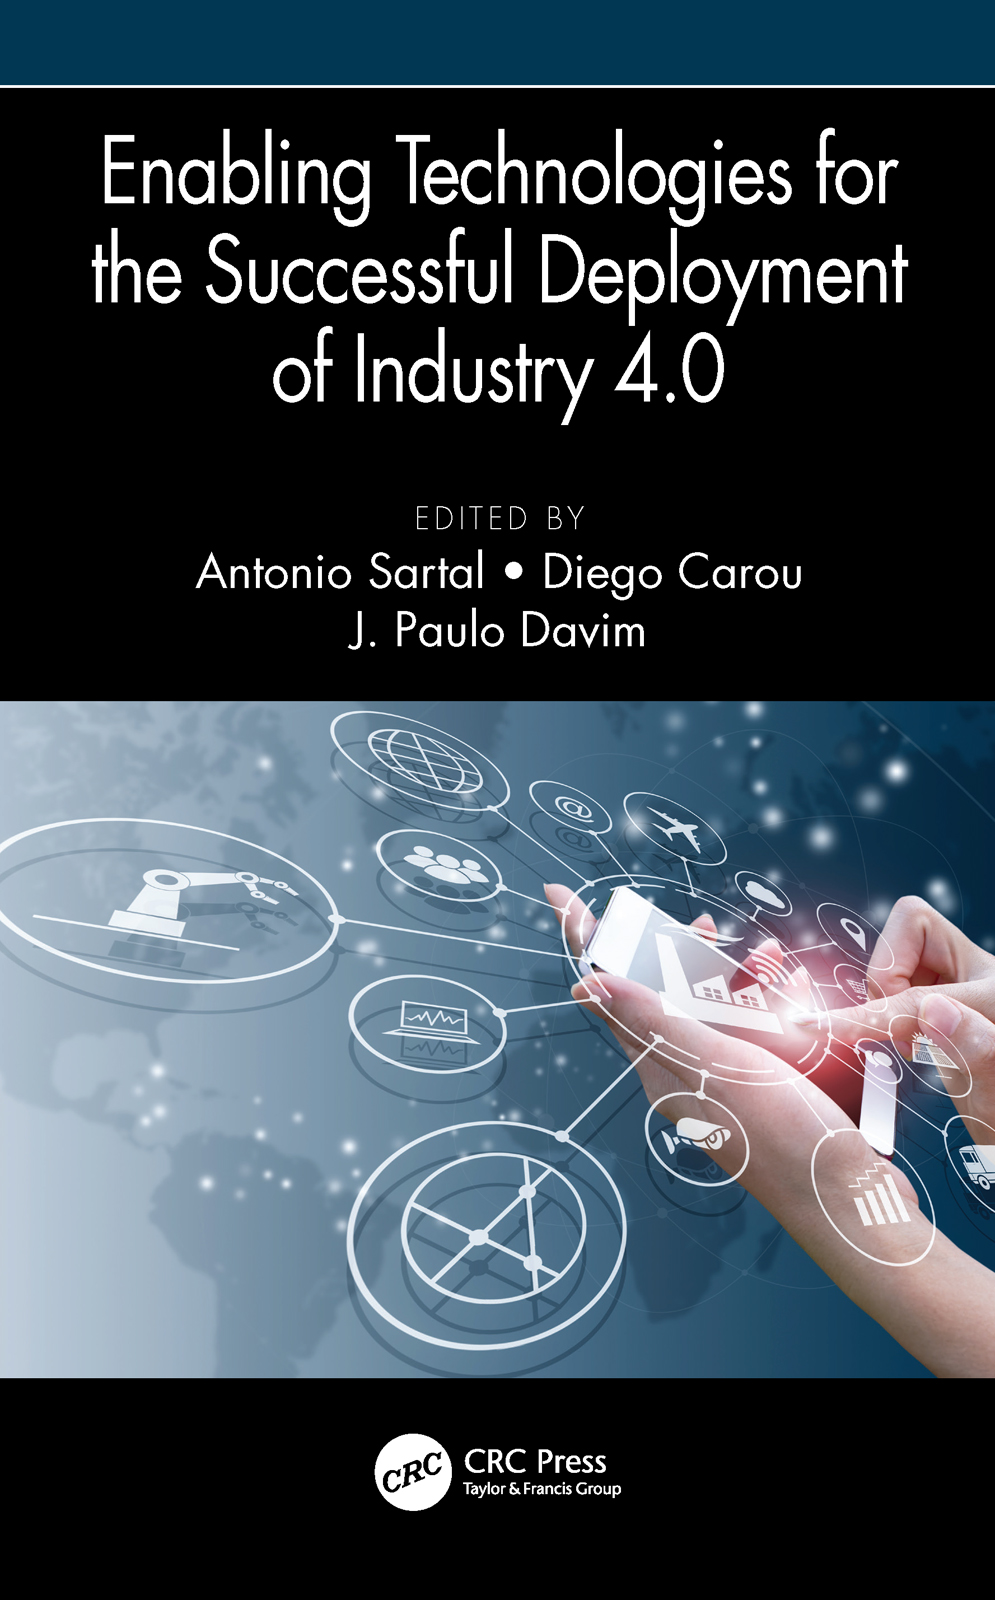 Imagen de portada del libro Enabling Technologies for the Successful Deployment of Industry 4.0